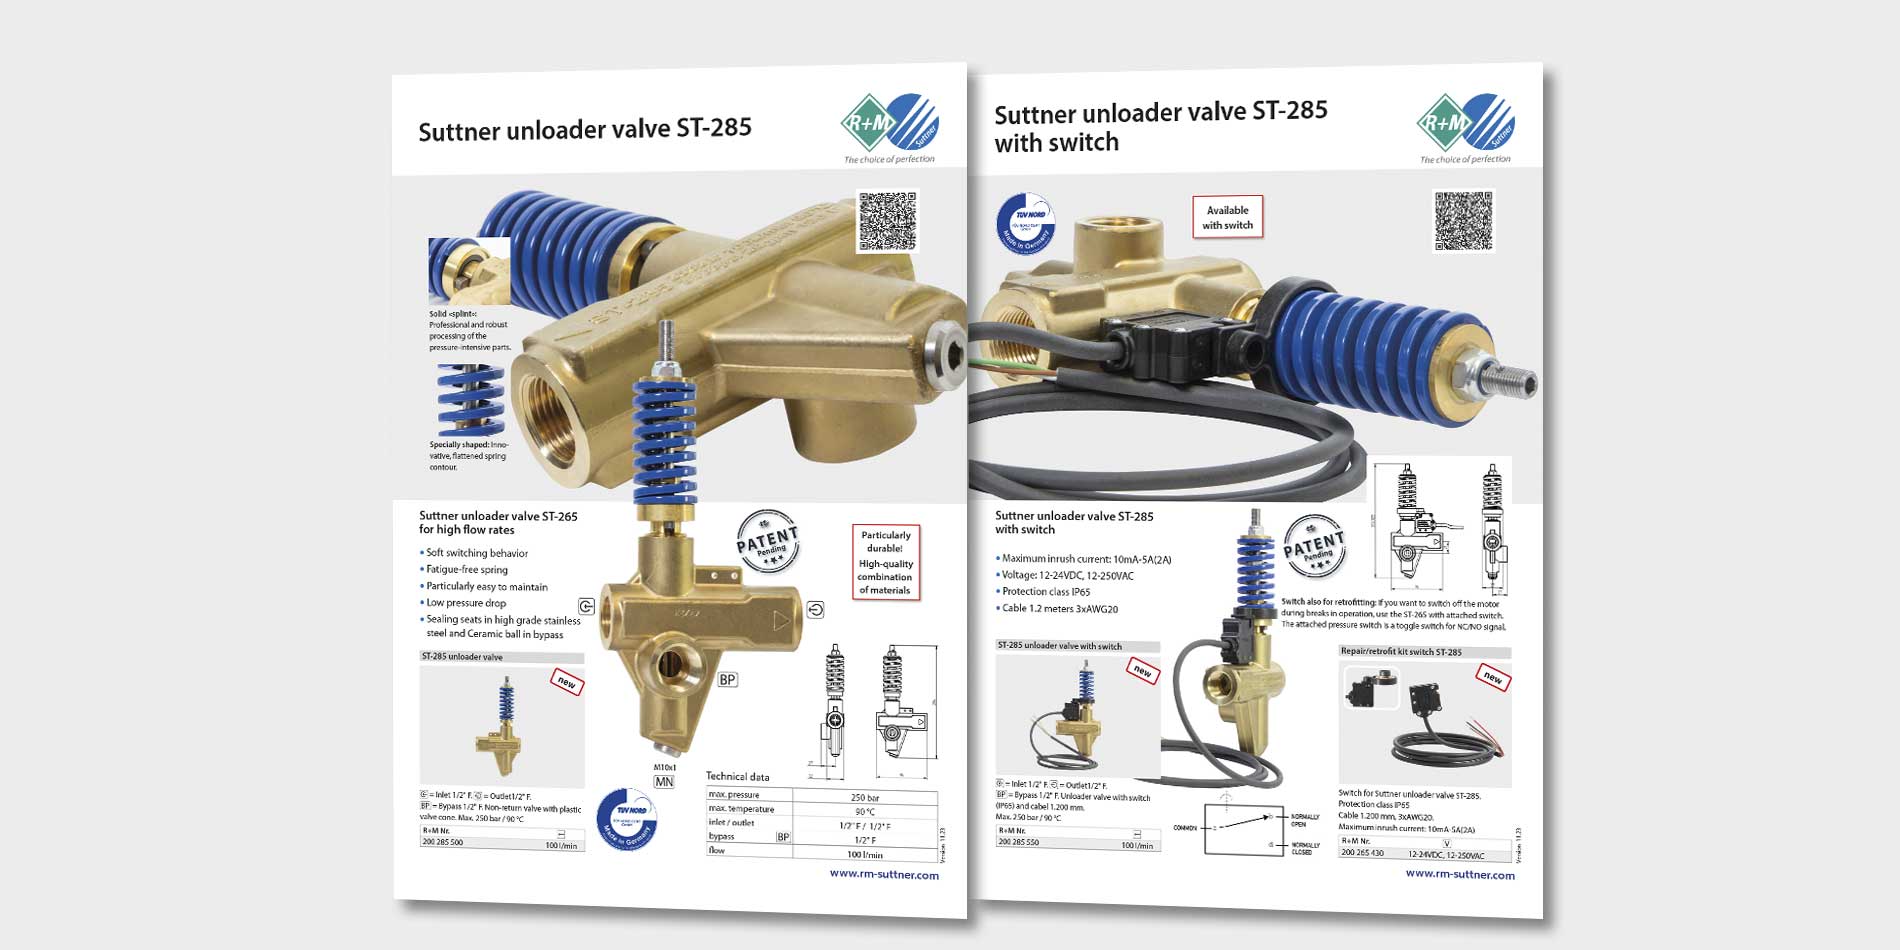 Suttner unloader valve ST-285